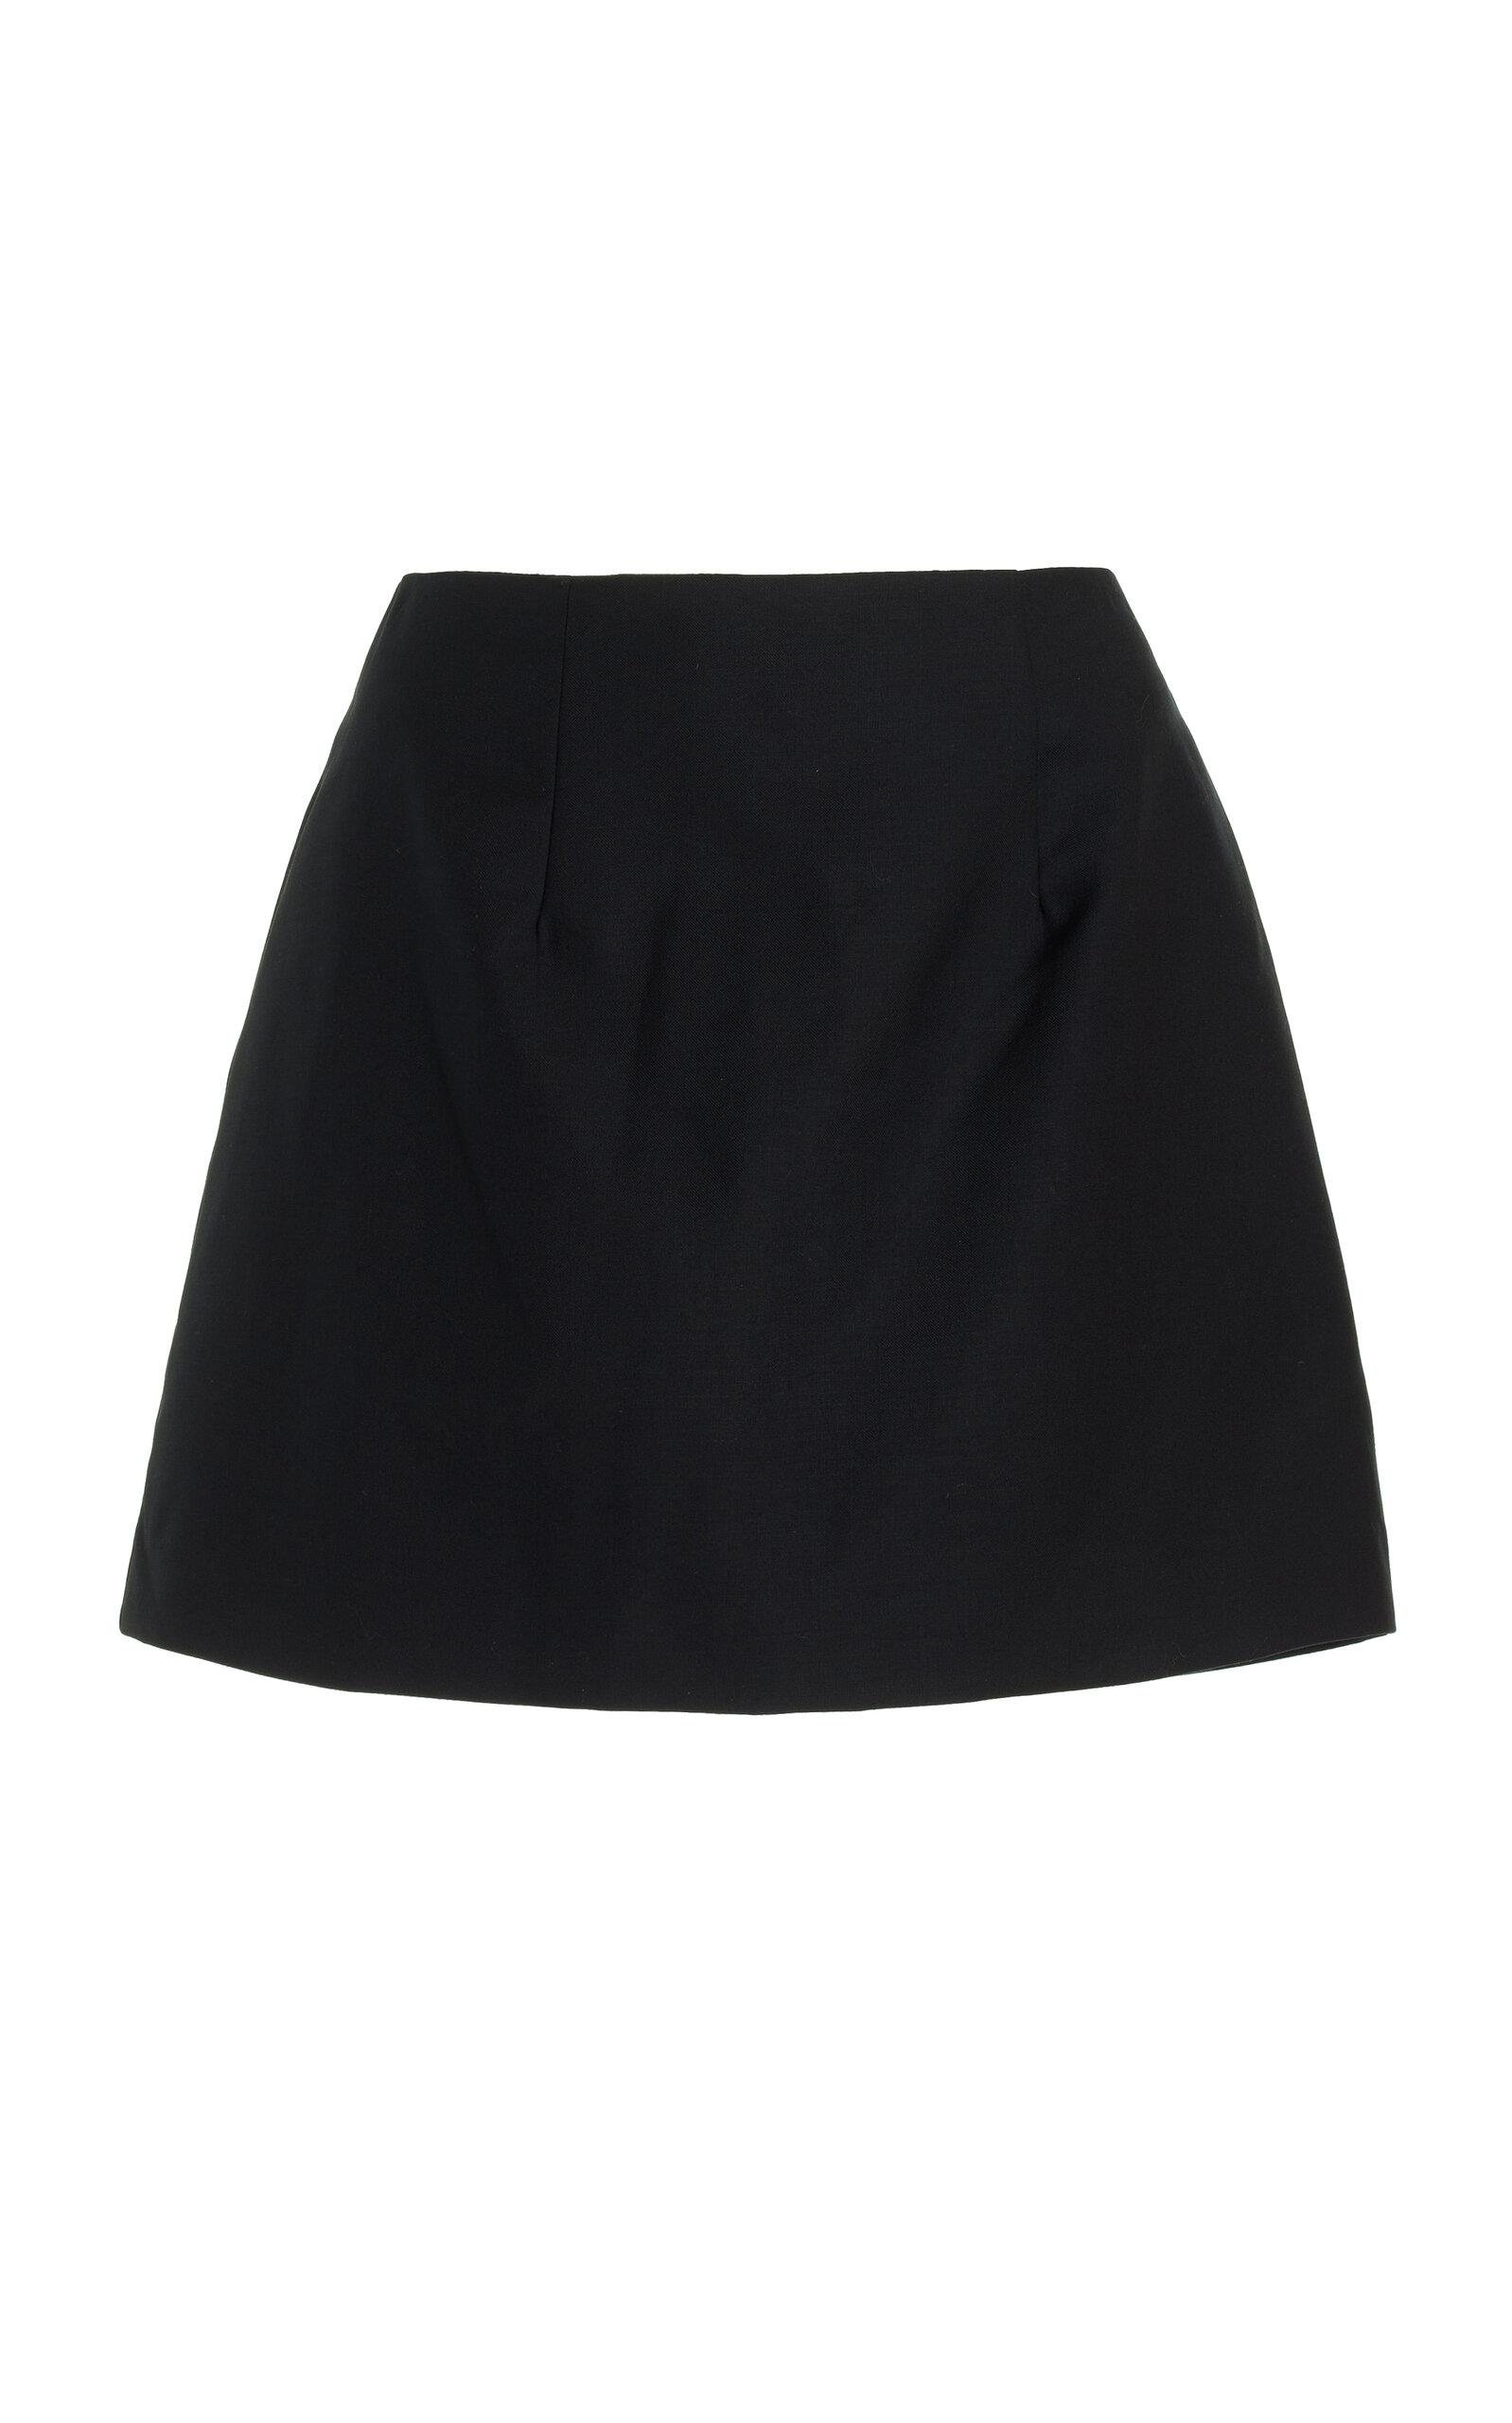 Beare Park - The Alexander Wool Mini Skirt - Black - AU 4 - Moda Operandi by BEARE PARK